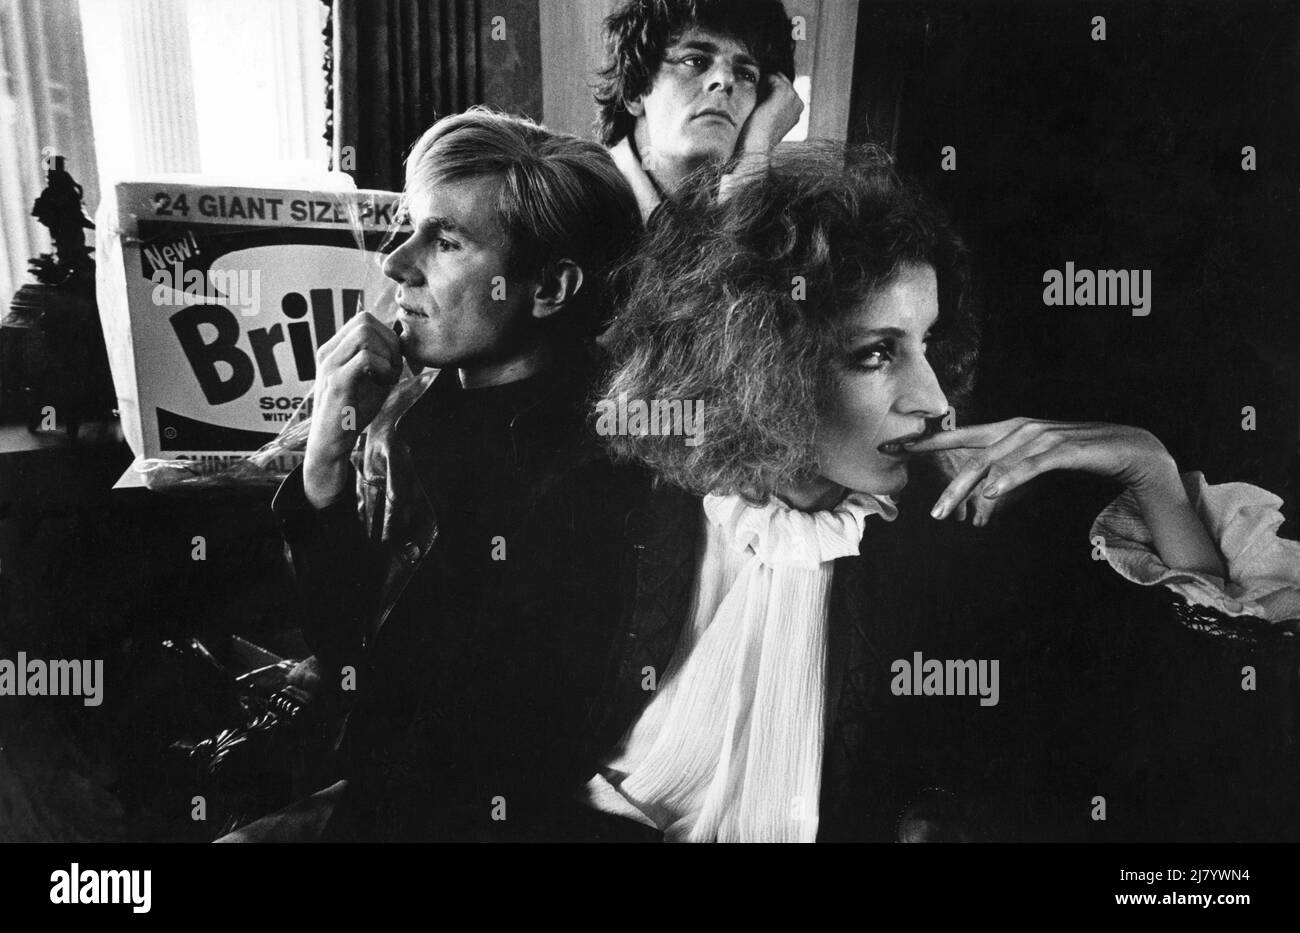 Andy Warhol, Paul Morrisey, and Viva Stock Photo